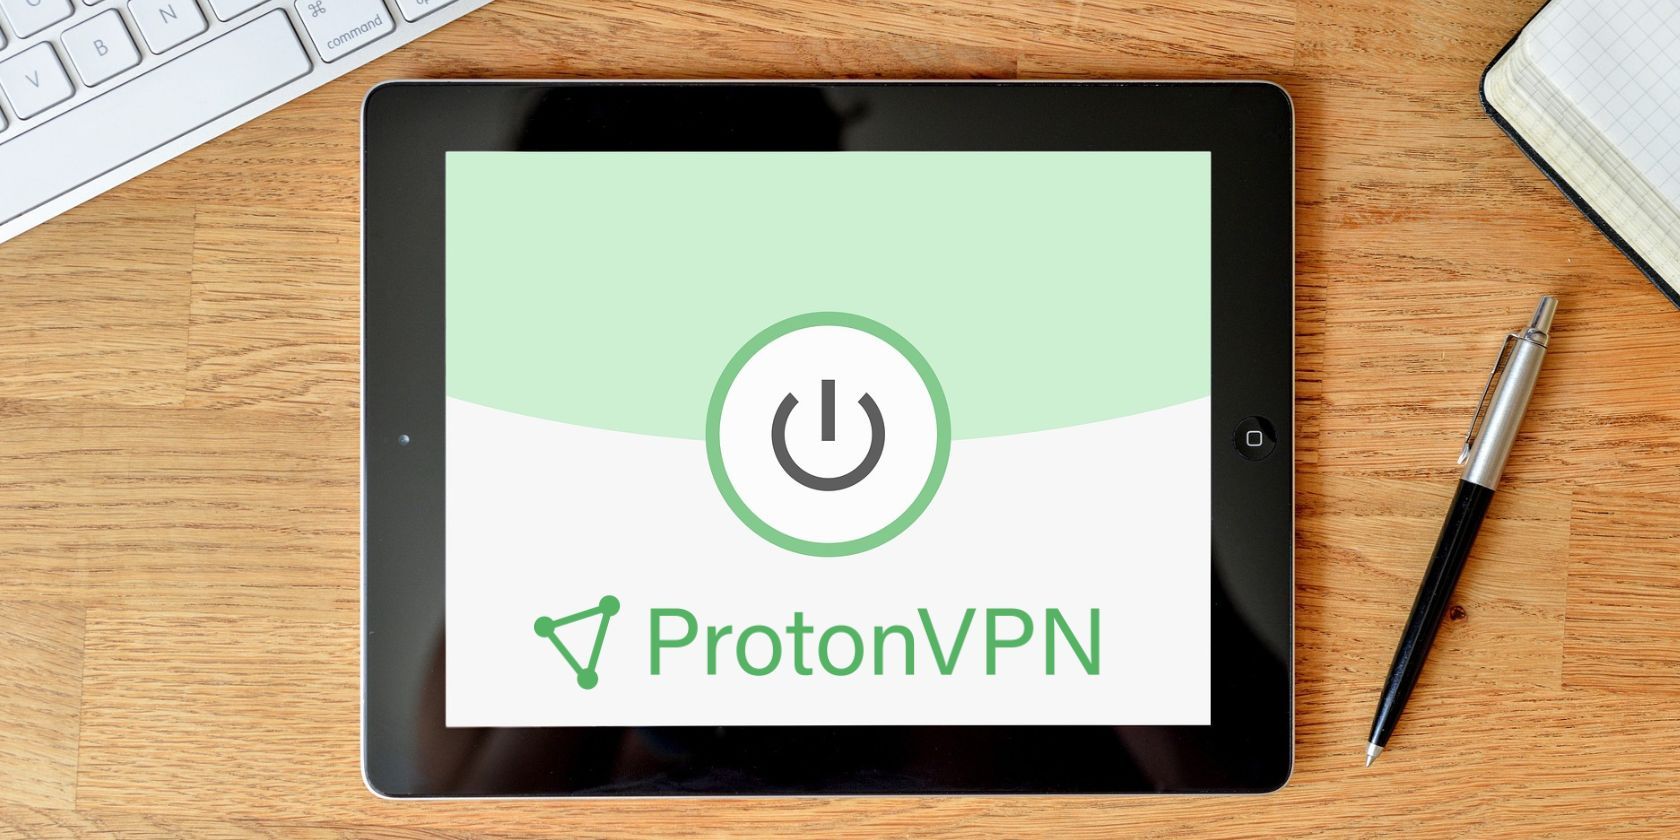 protonvpn logo with power symbol on tablet